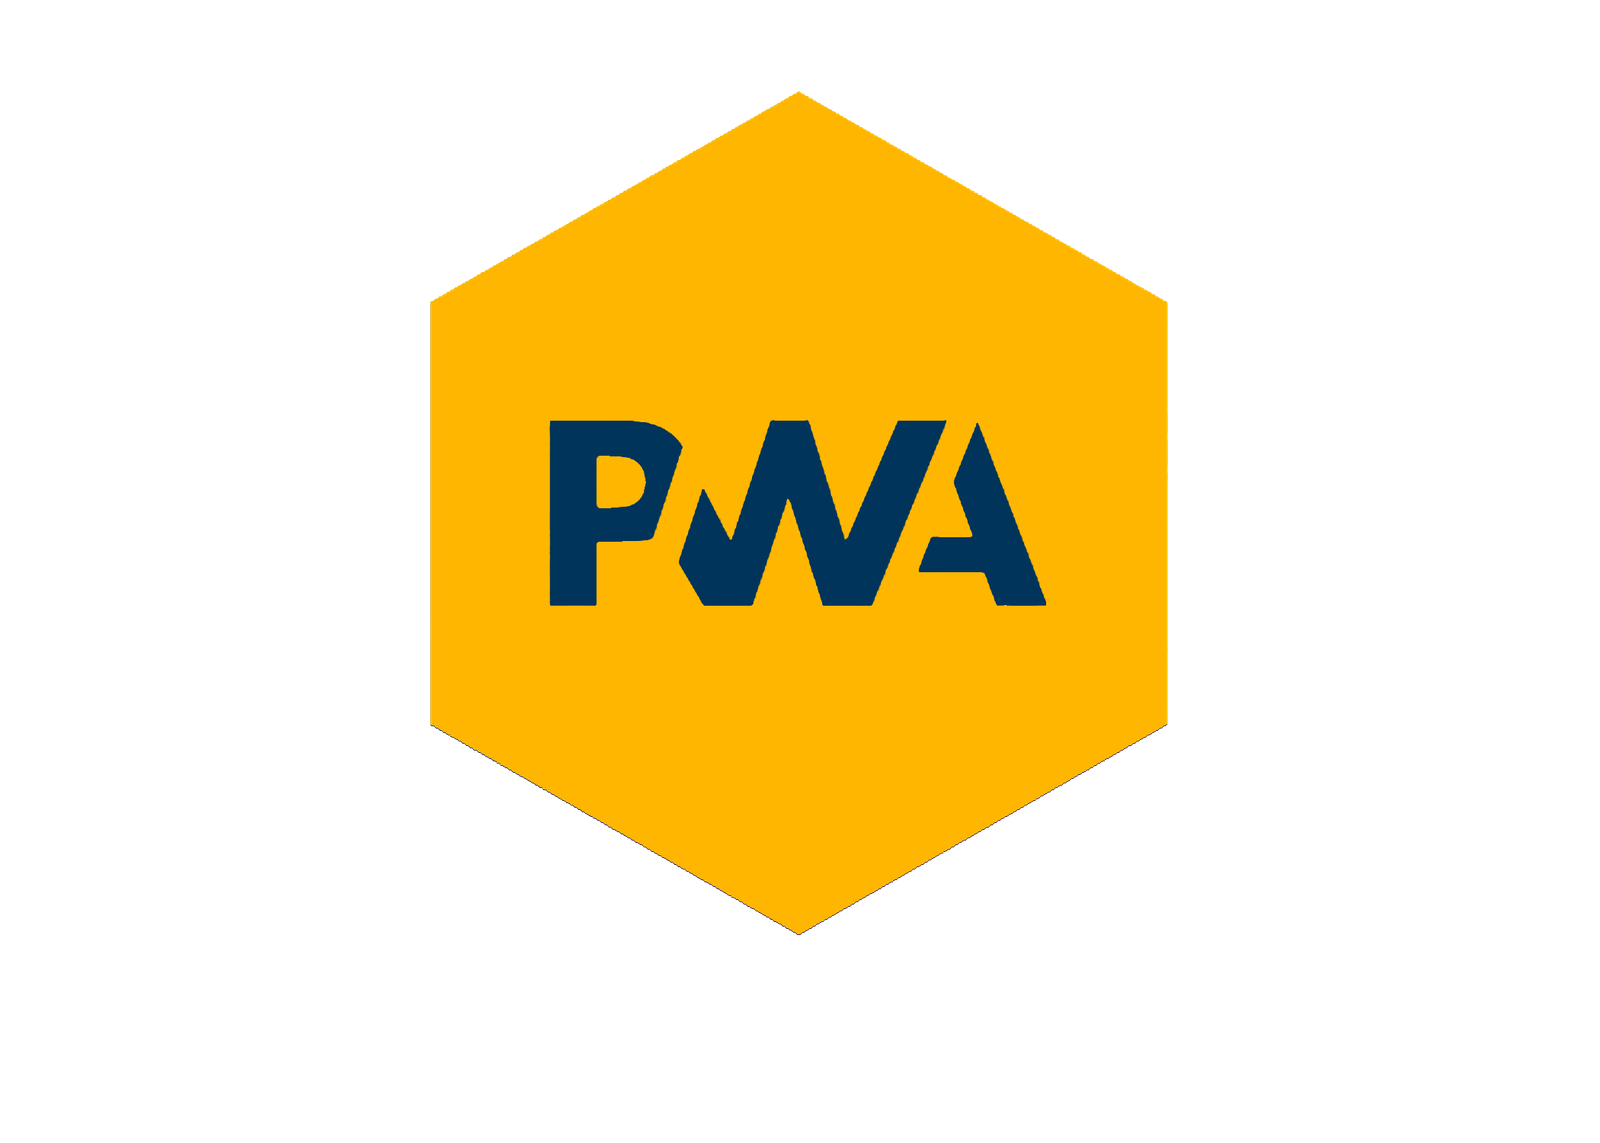 pwa-development